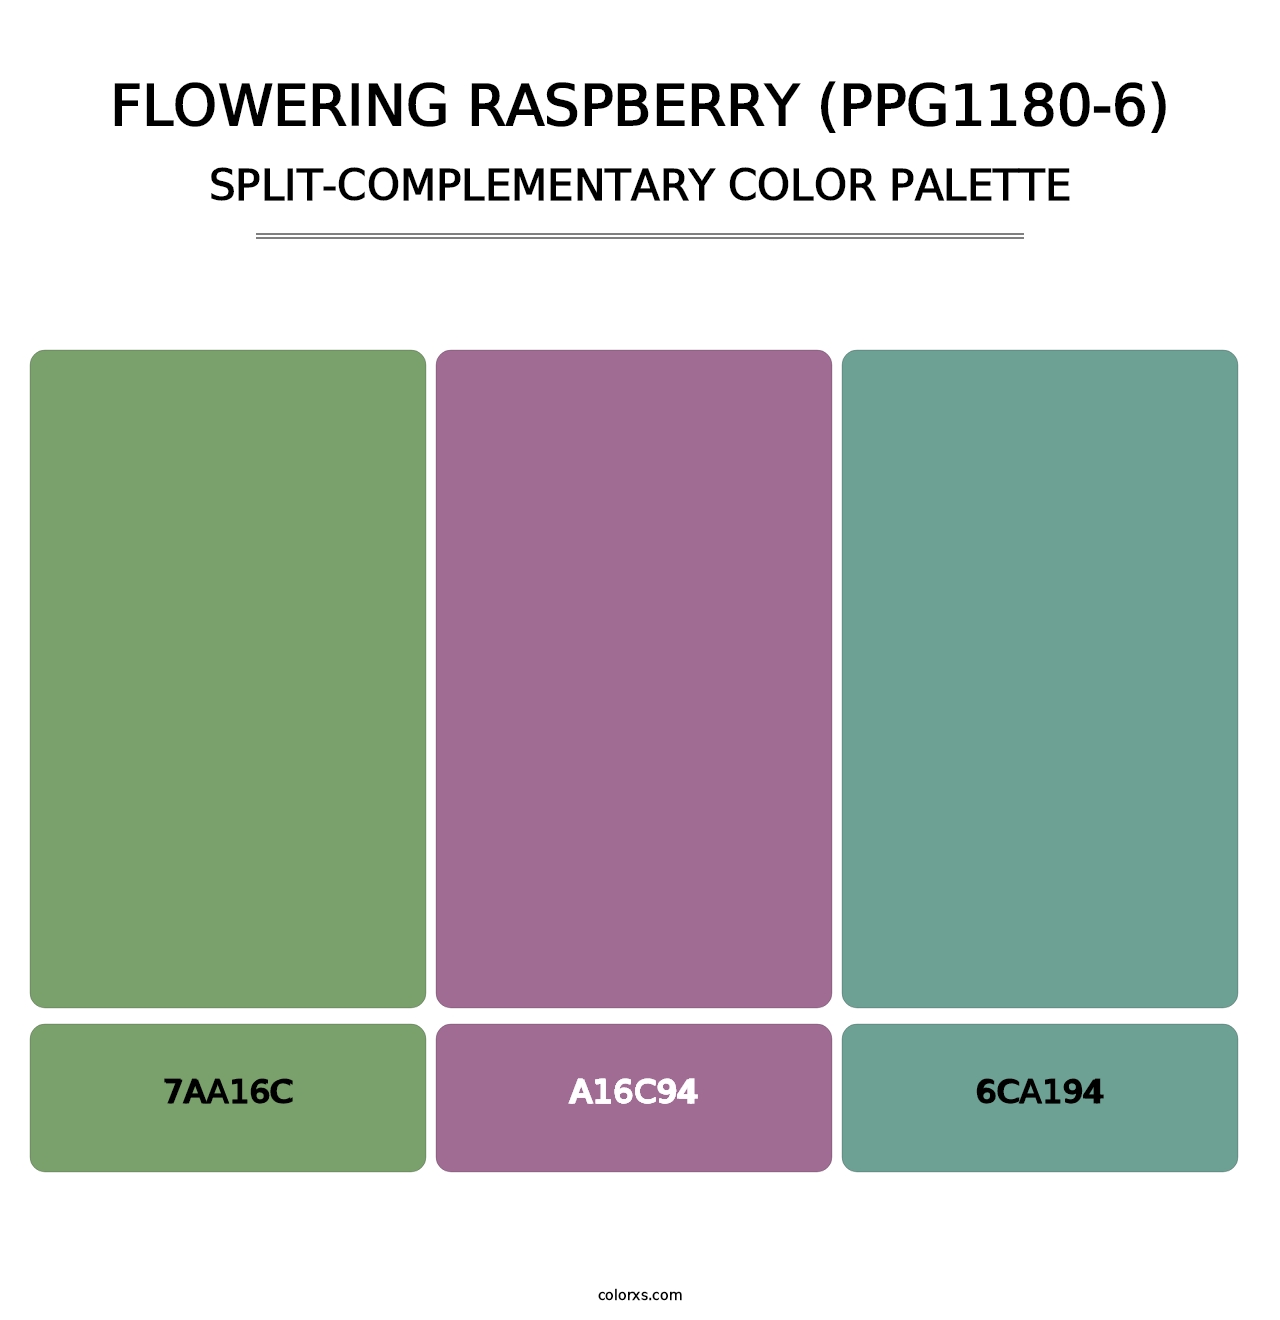 Flowering Raspberry (PPG1180-6) - Split-Complementary Color Palette